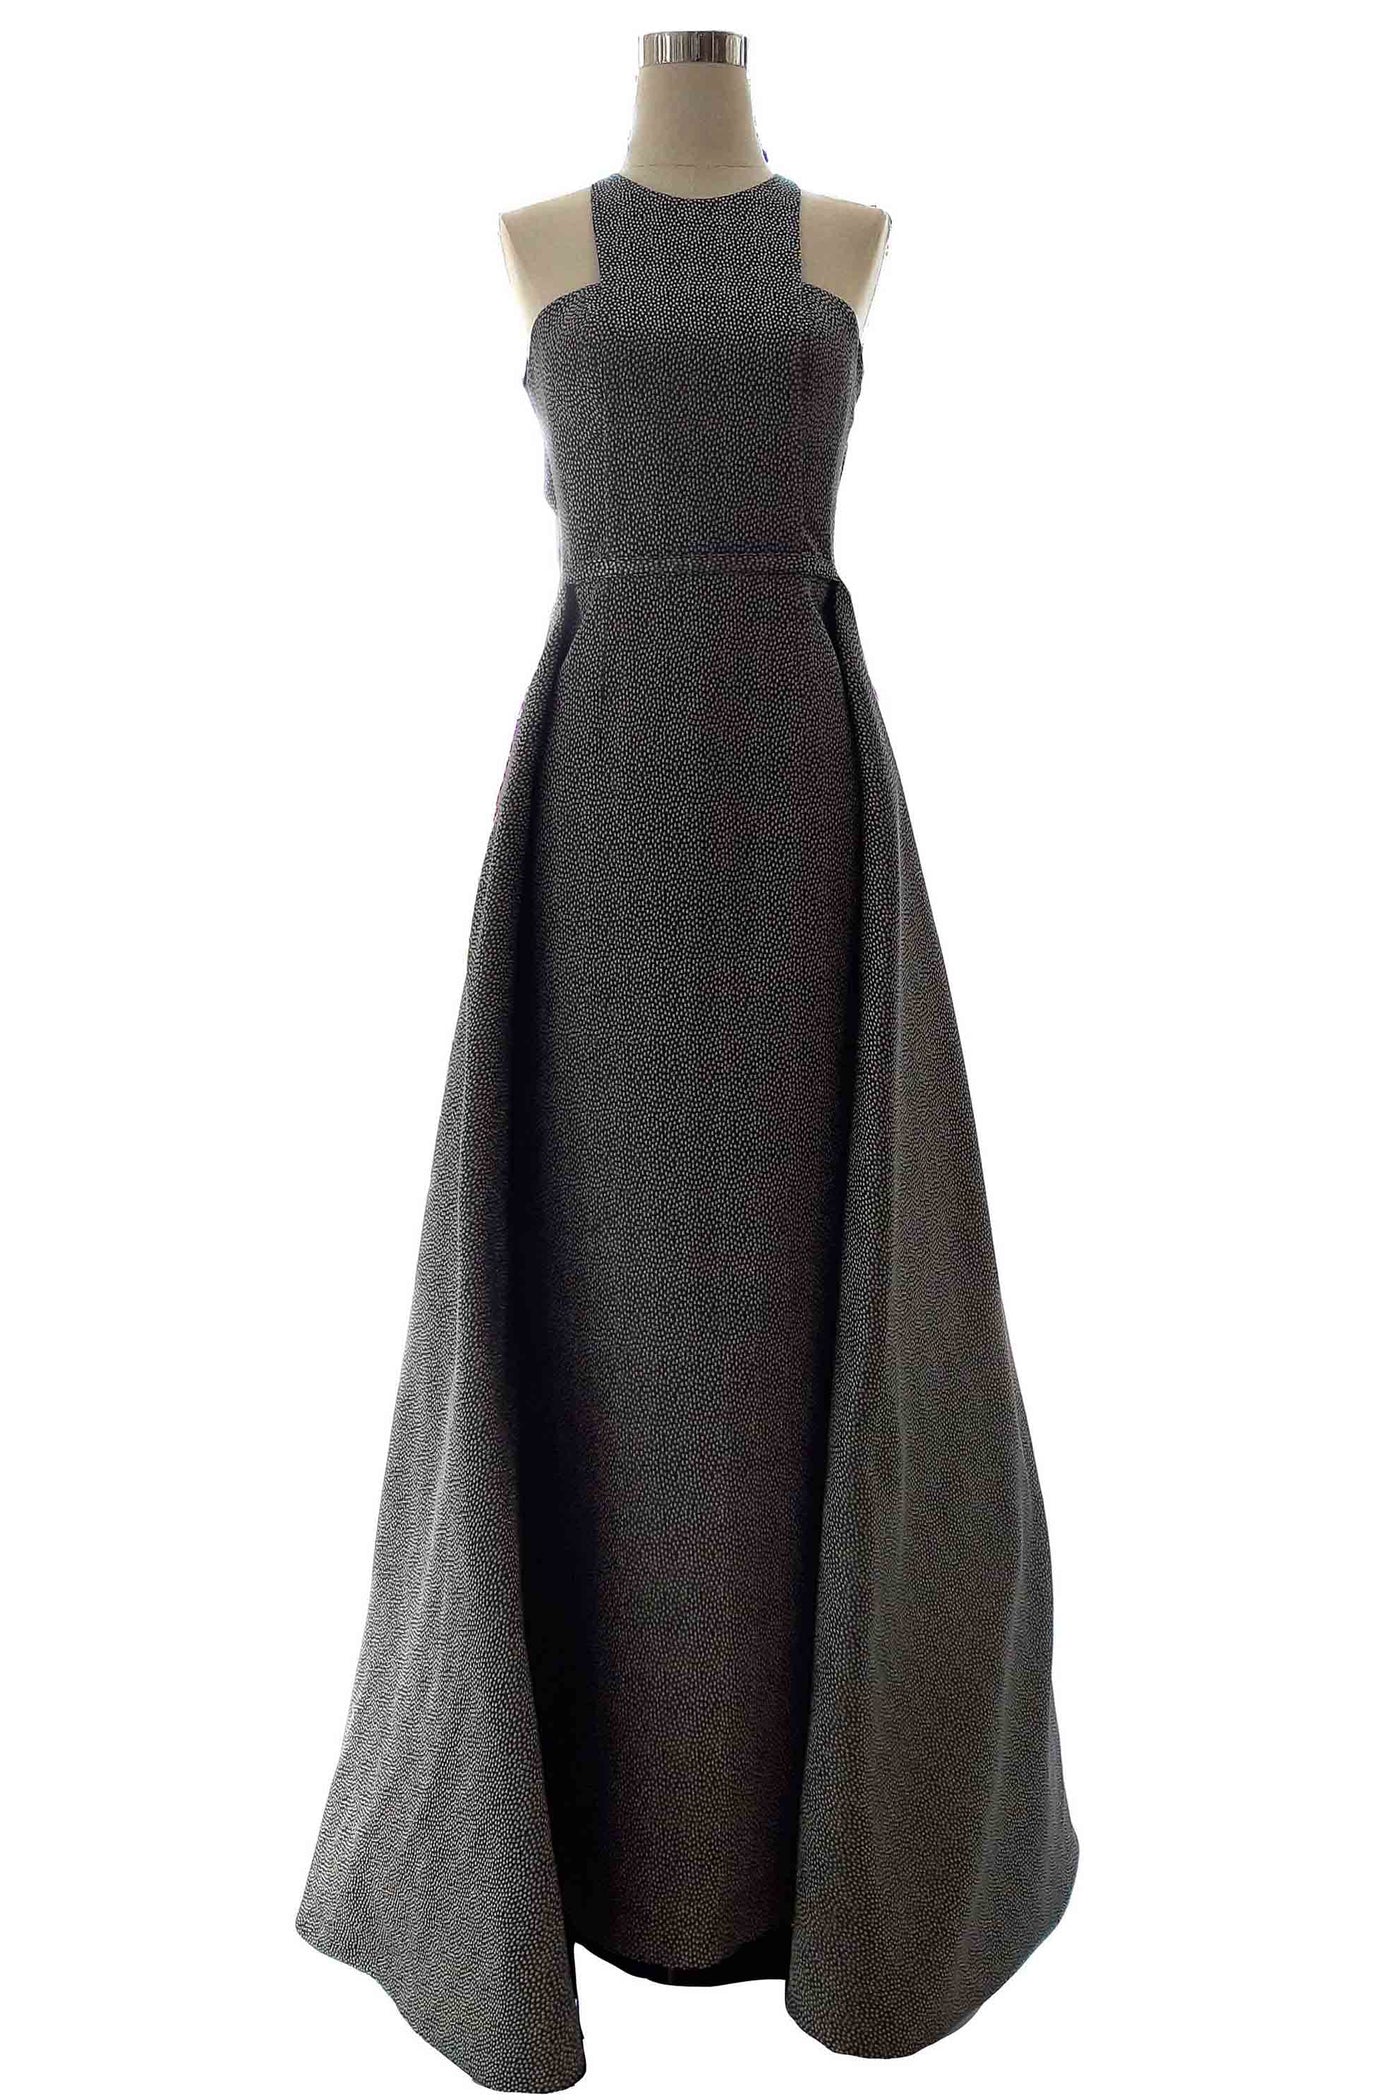 Buy : Stella Lunardy - Dark Grey Halter Ball Gown